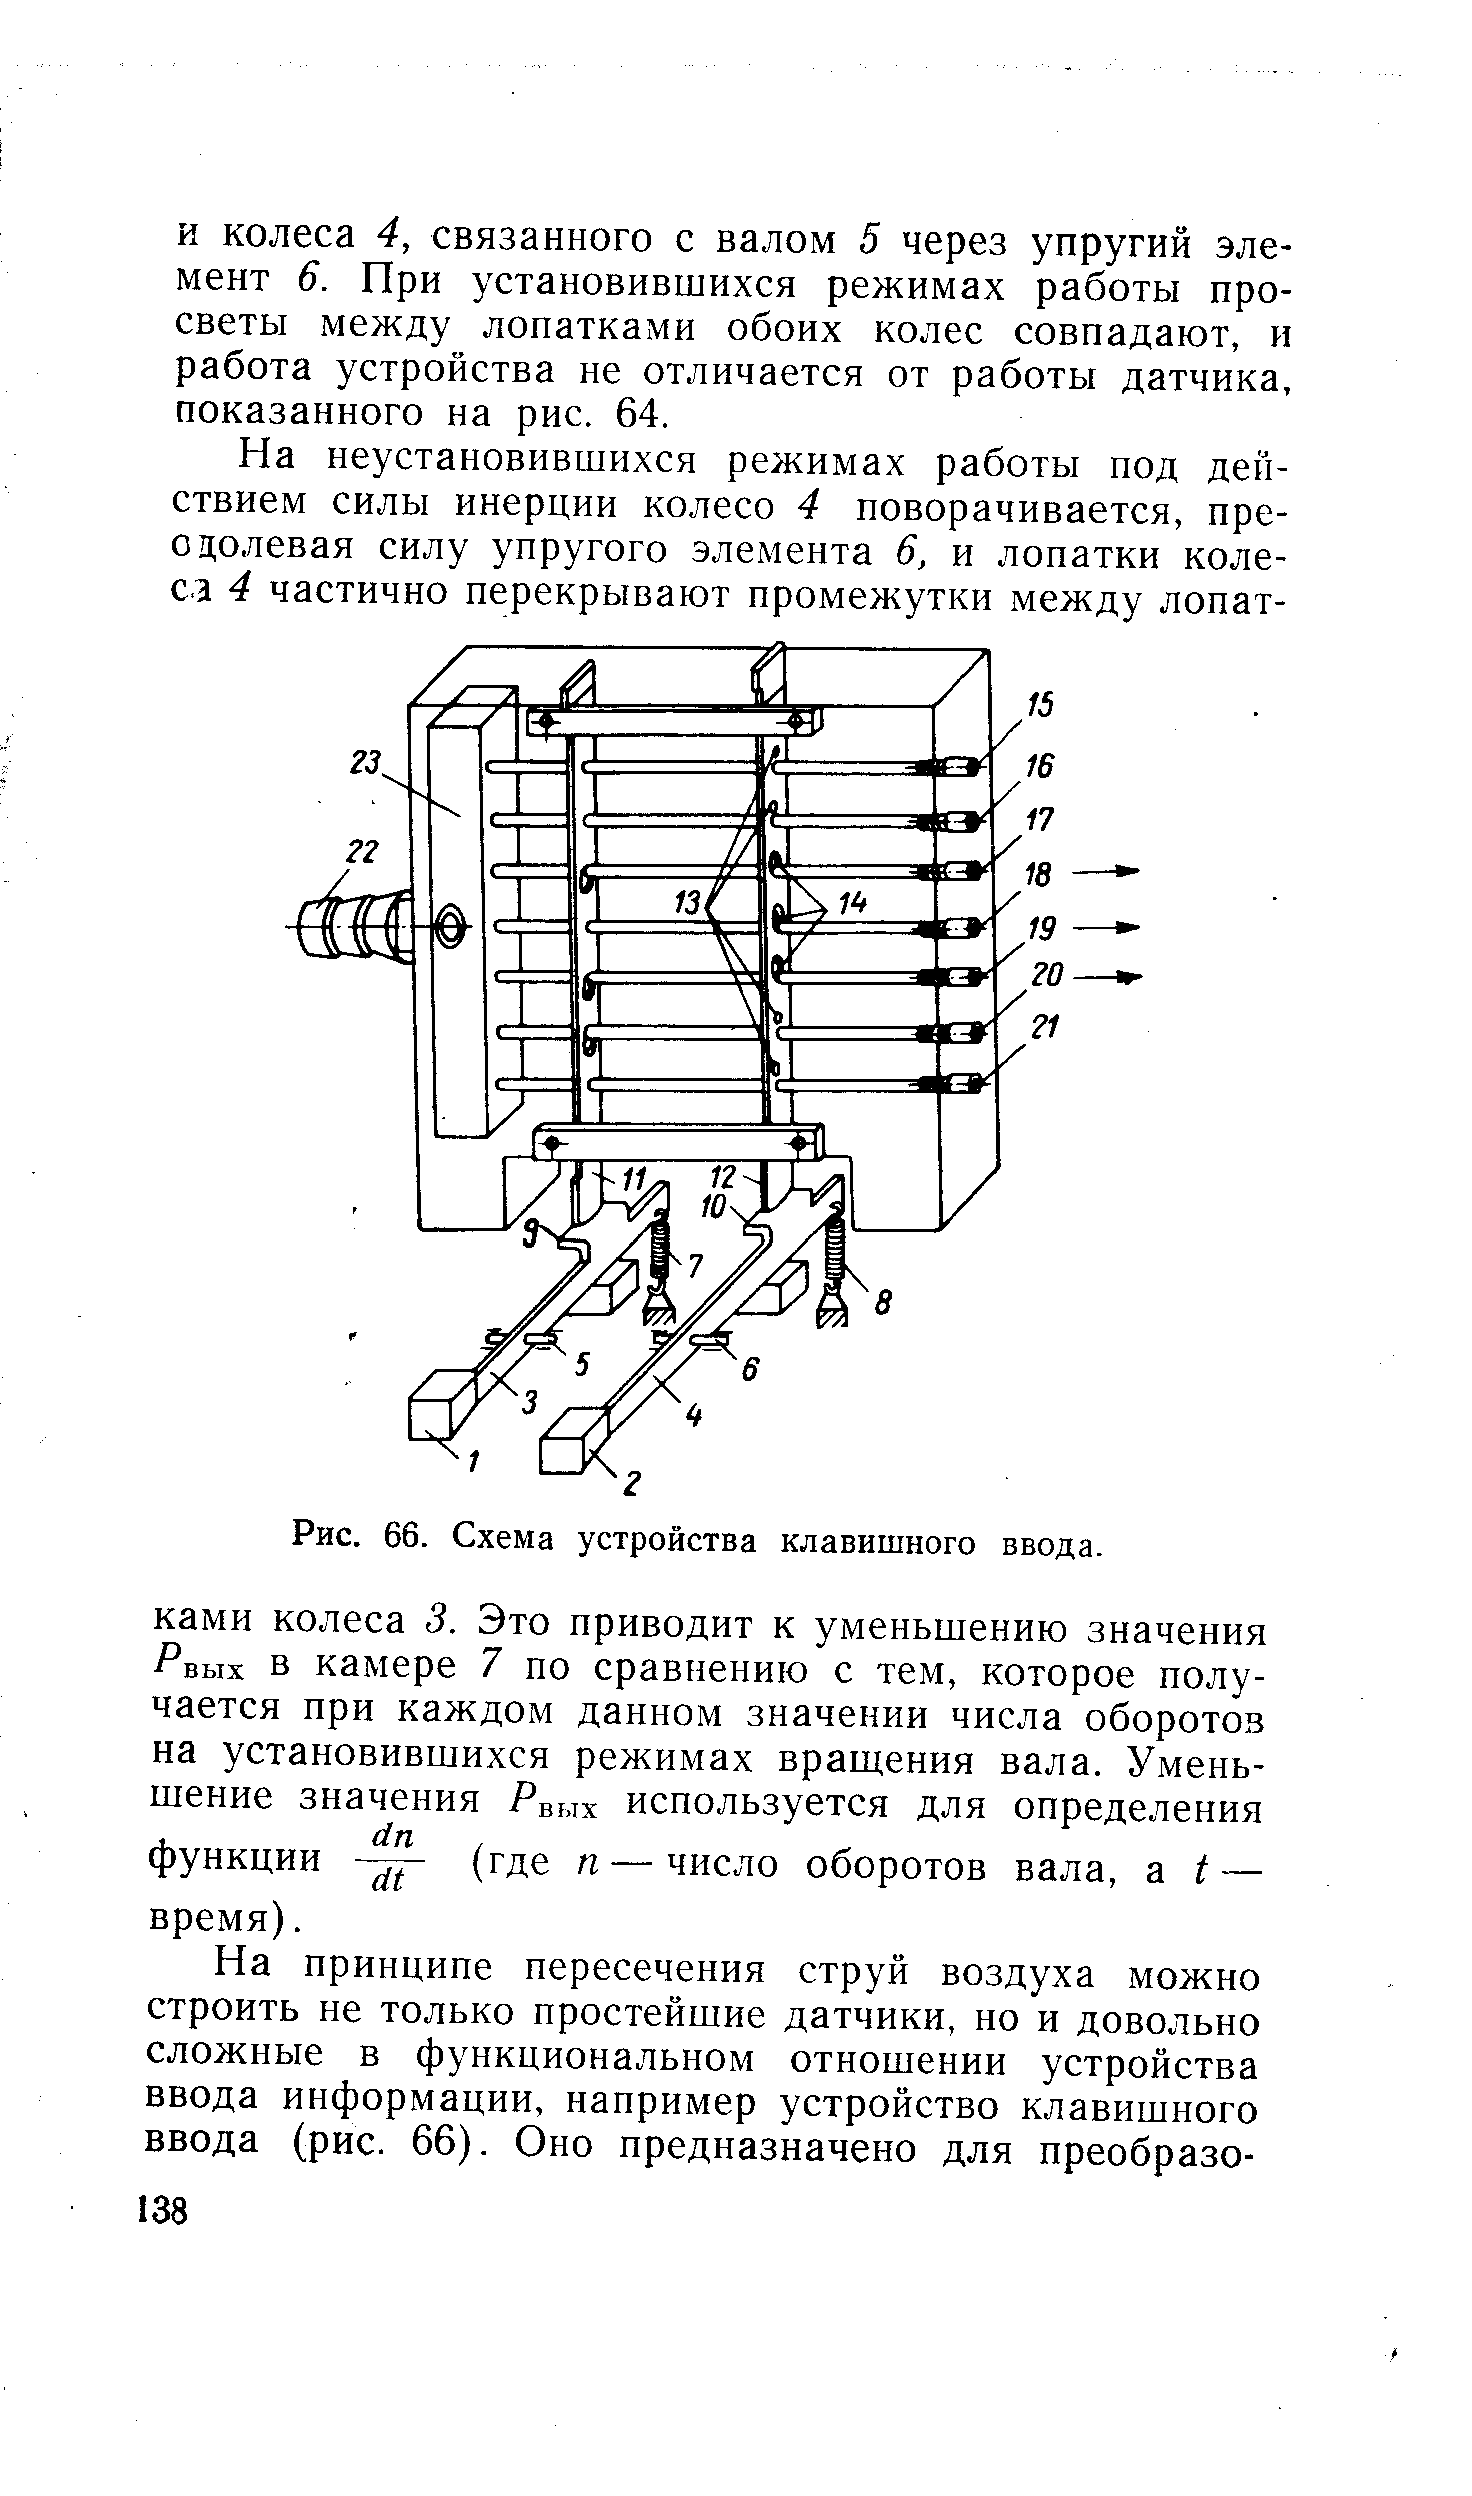 Рис. 66. Схема устройства клавишного ввода.
